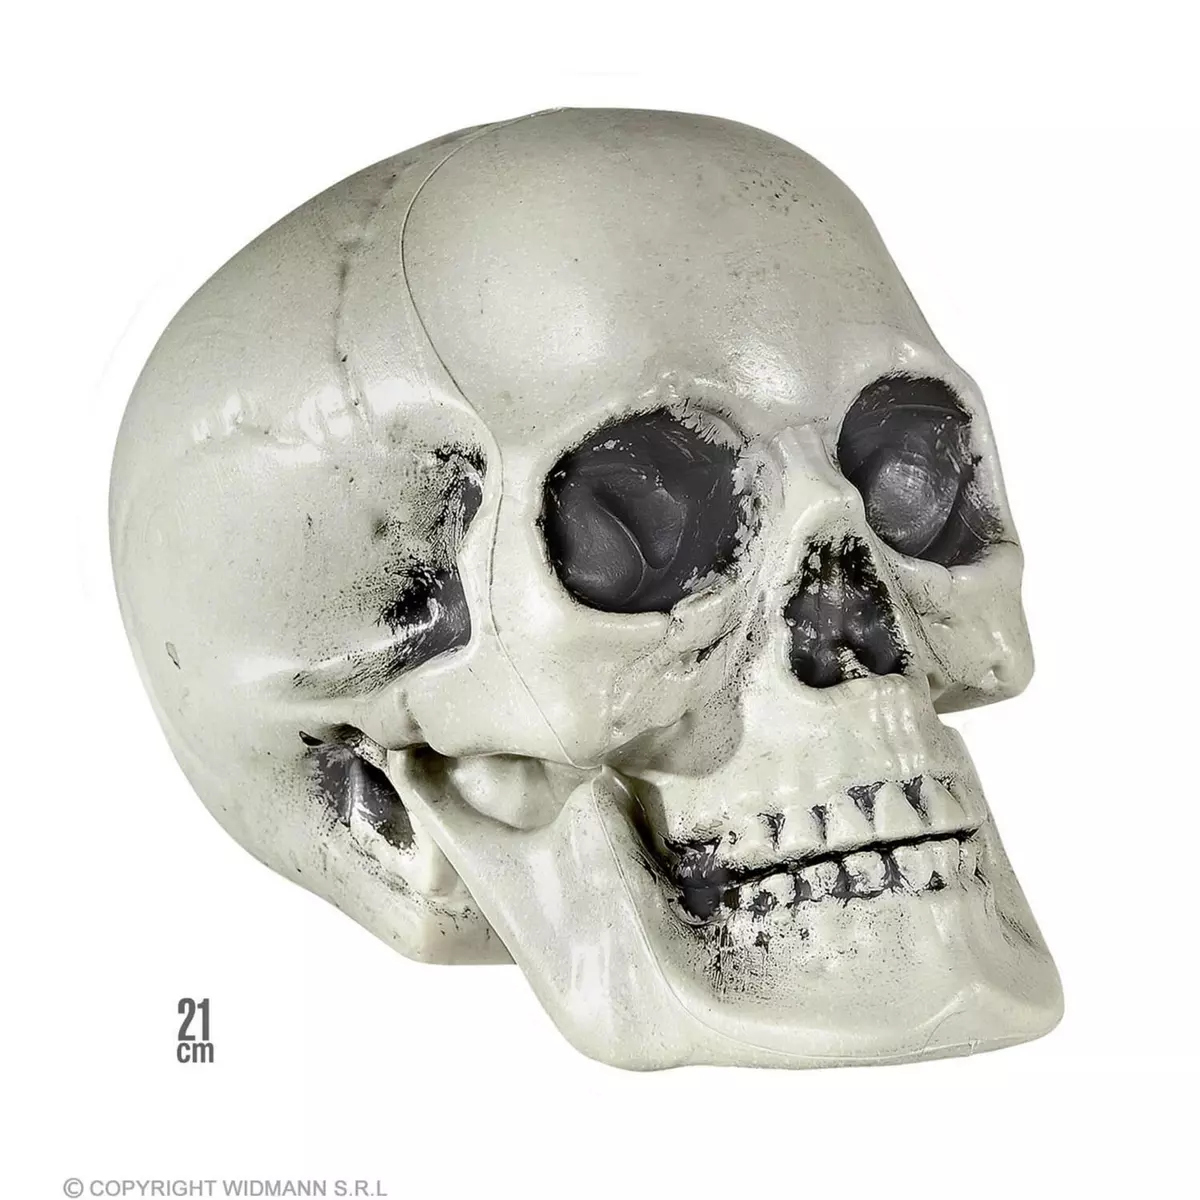 WIDMANN Crâne décoratif - 21 cm